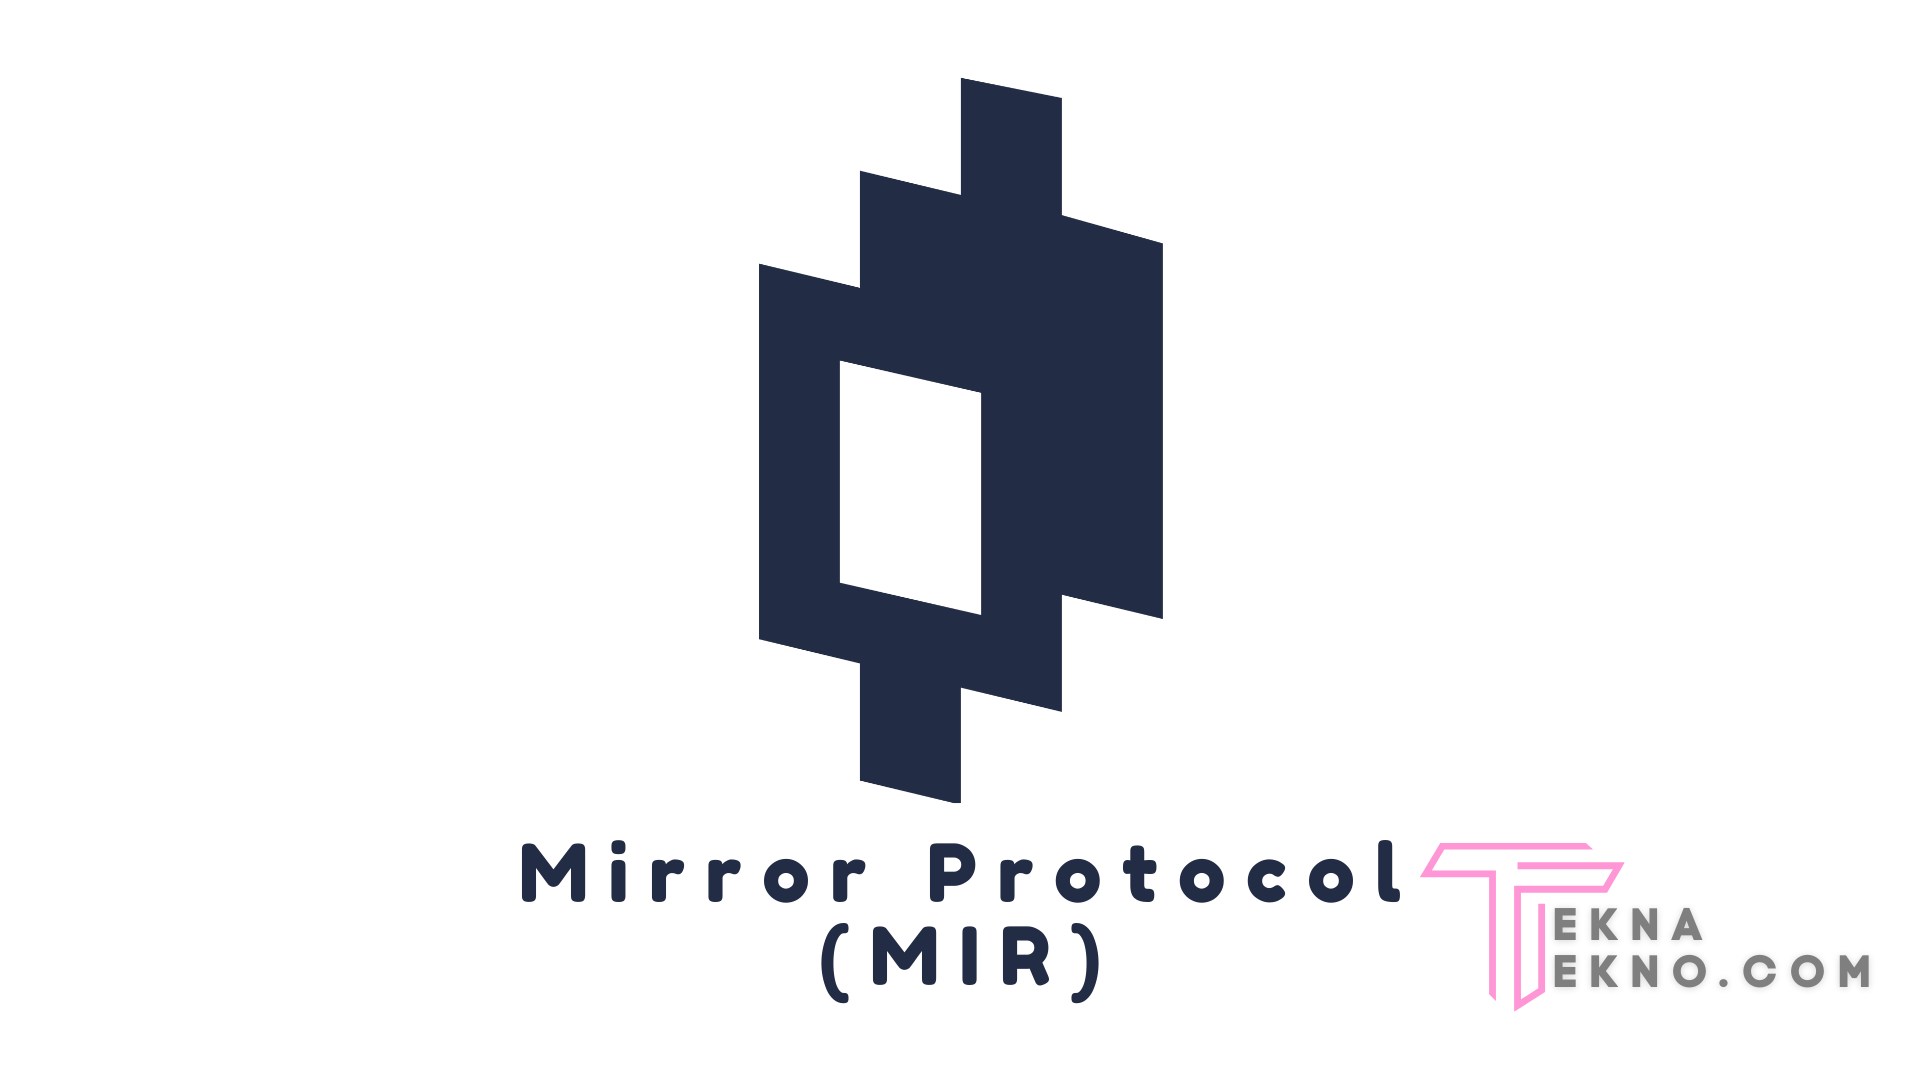 Mengenal Mirror Protocol (MIR)